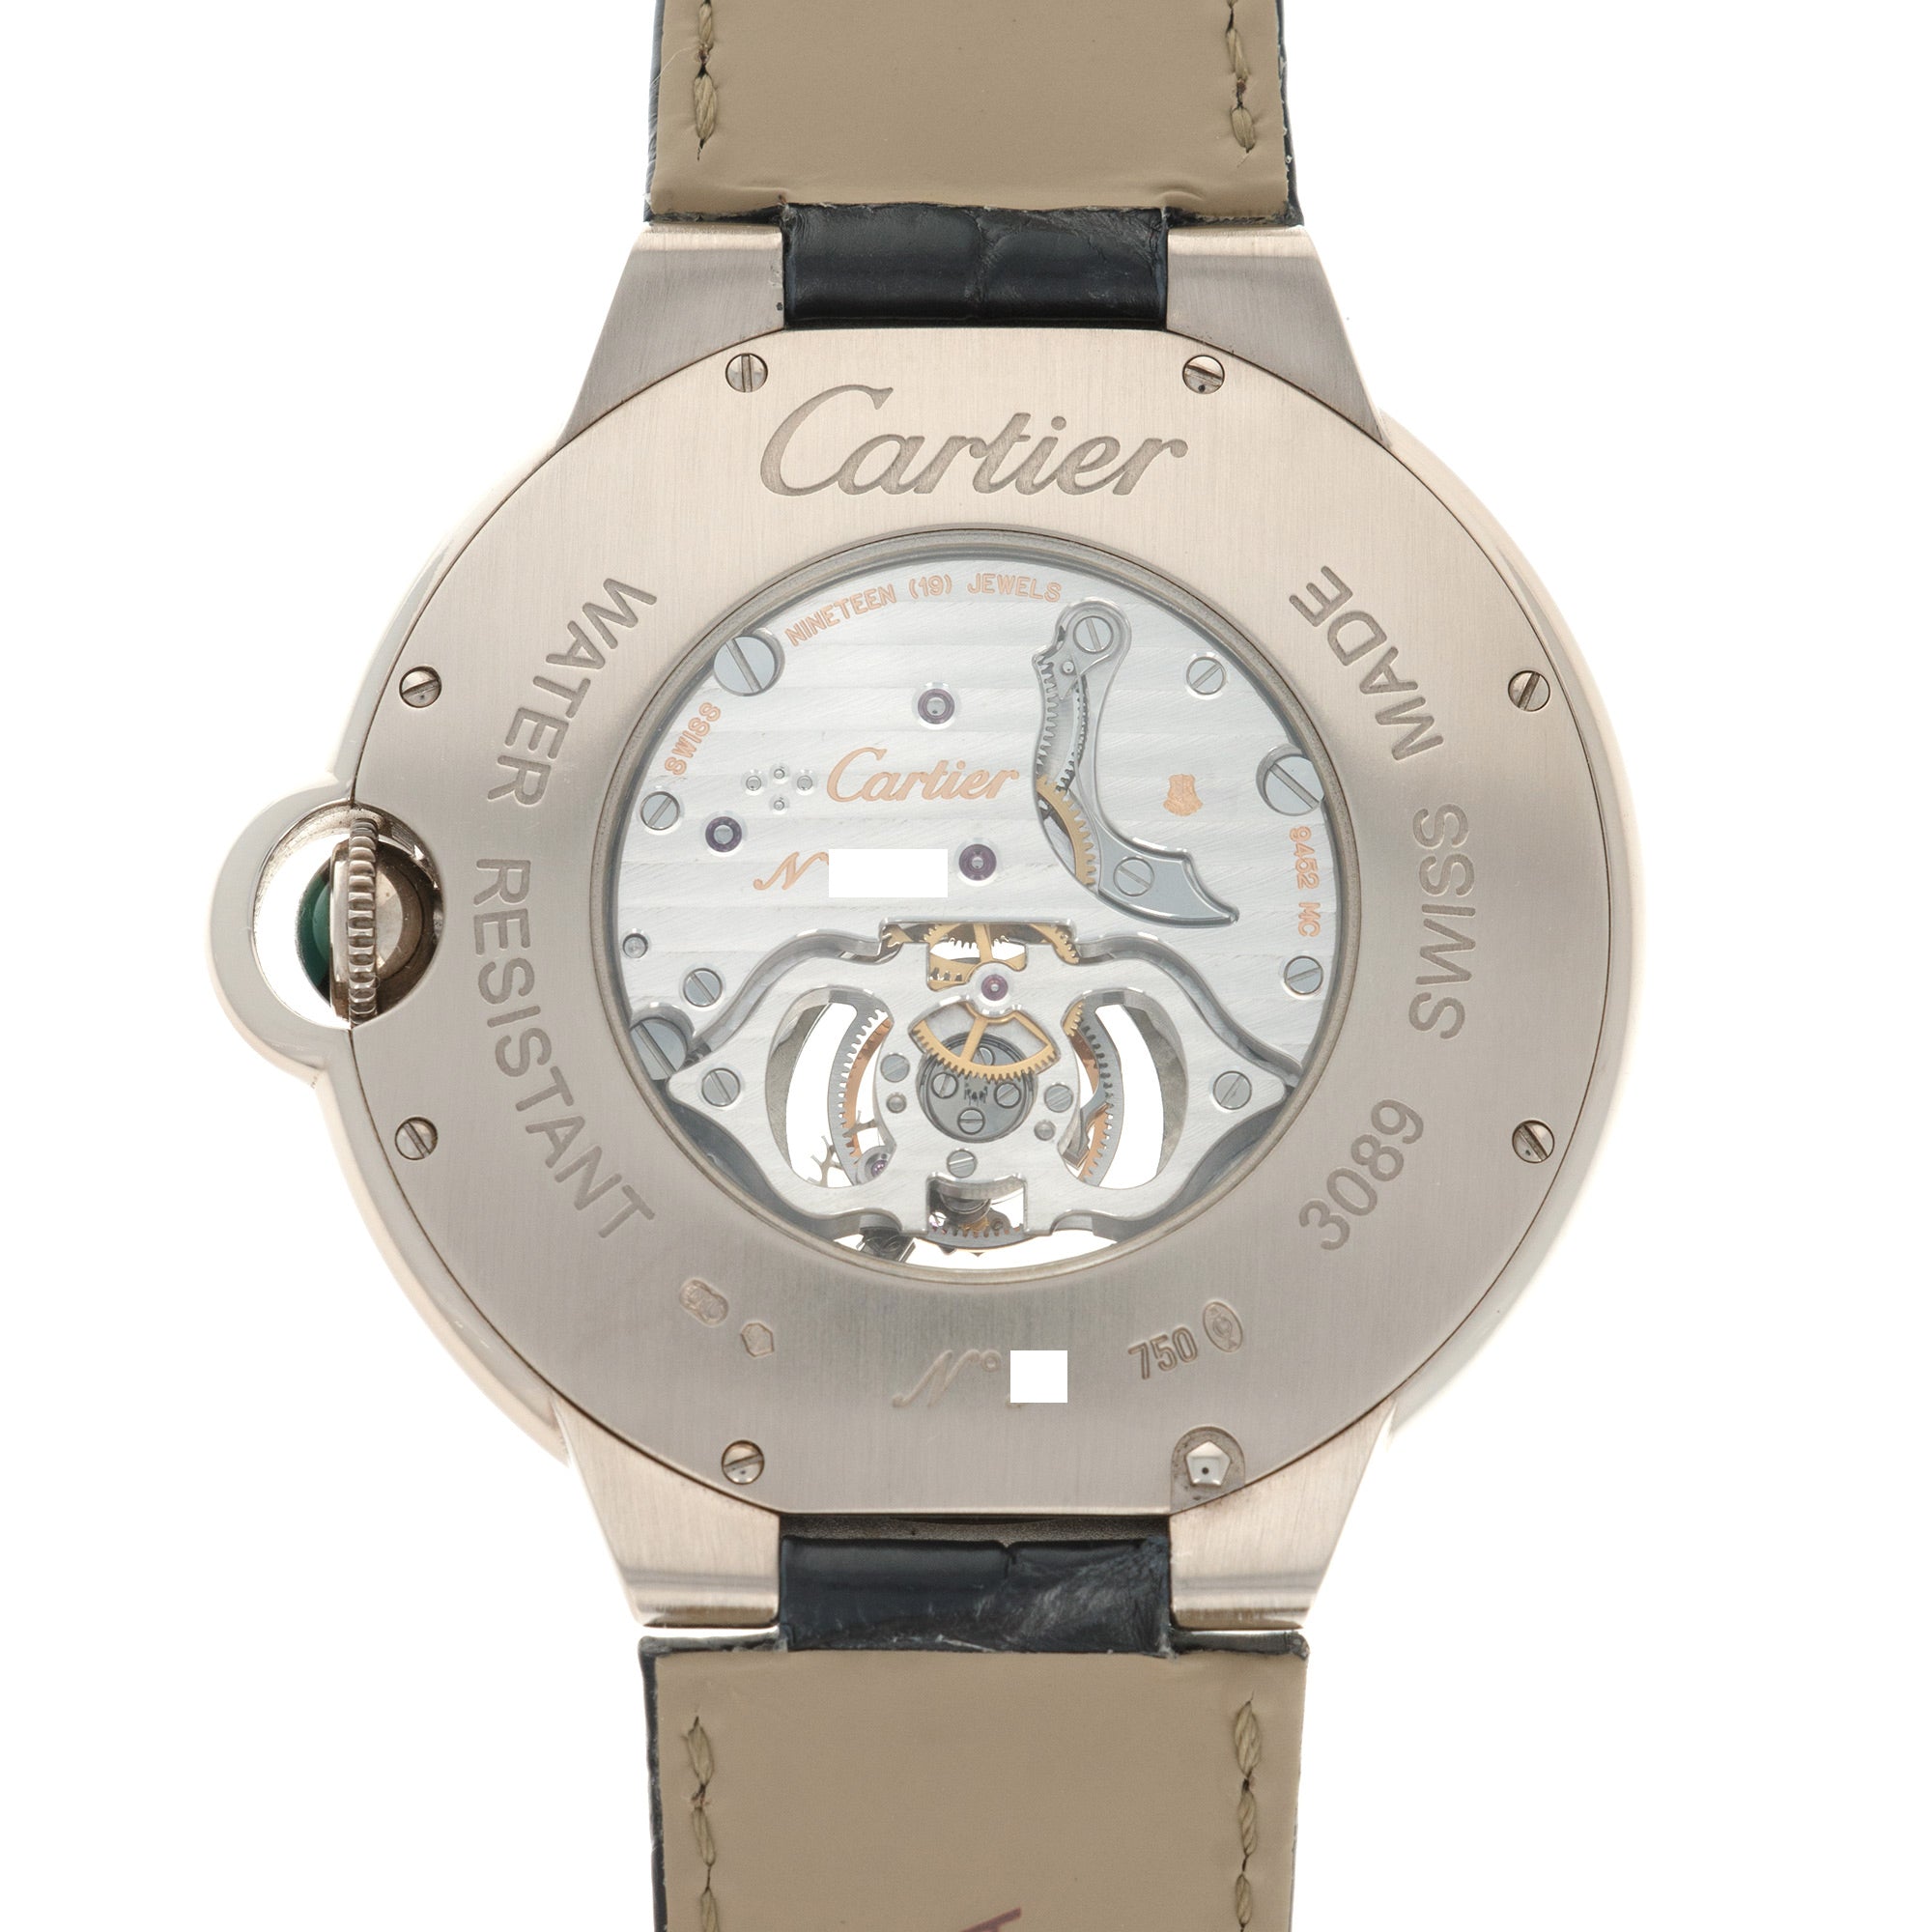 Cartier - Cartier White Gold Ballon Bleu Tourbillon Watch - The Keystone Watches